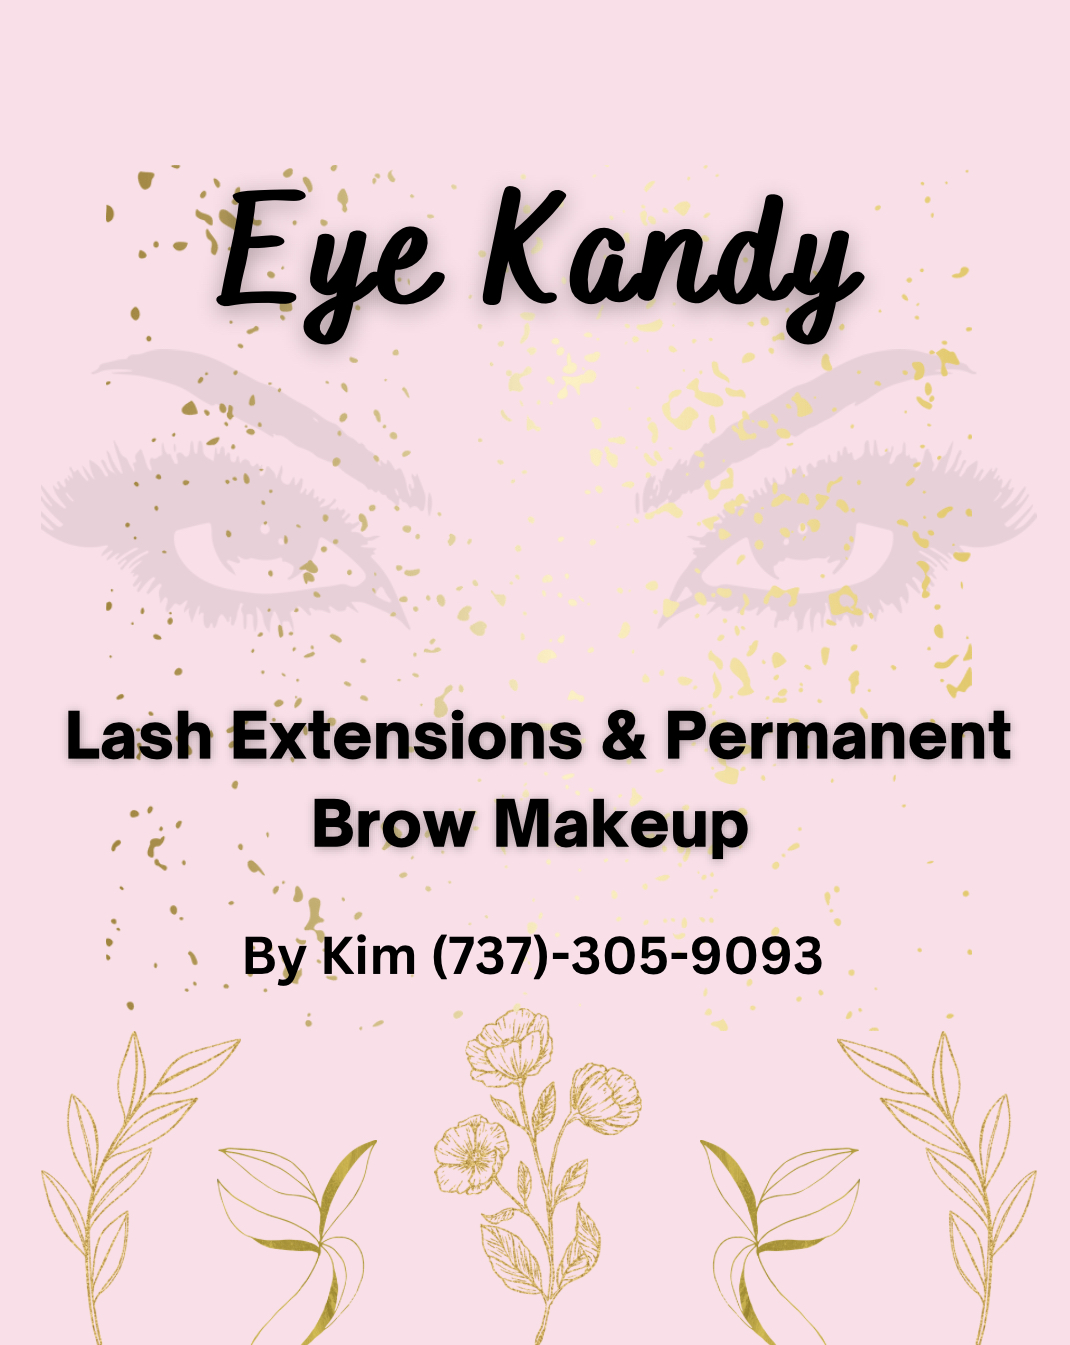 Eye Kandy lashes & permanent brow makeup